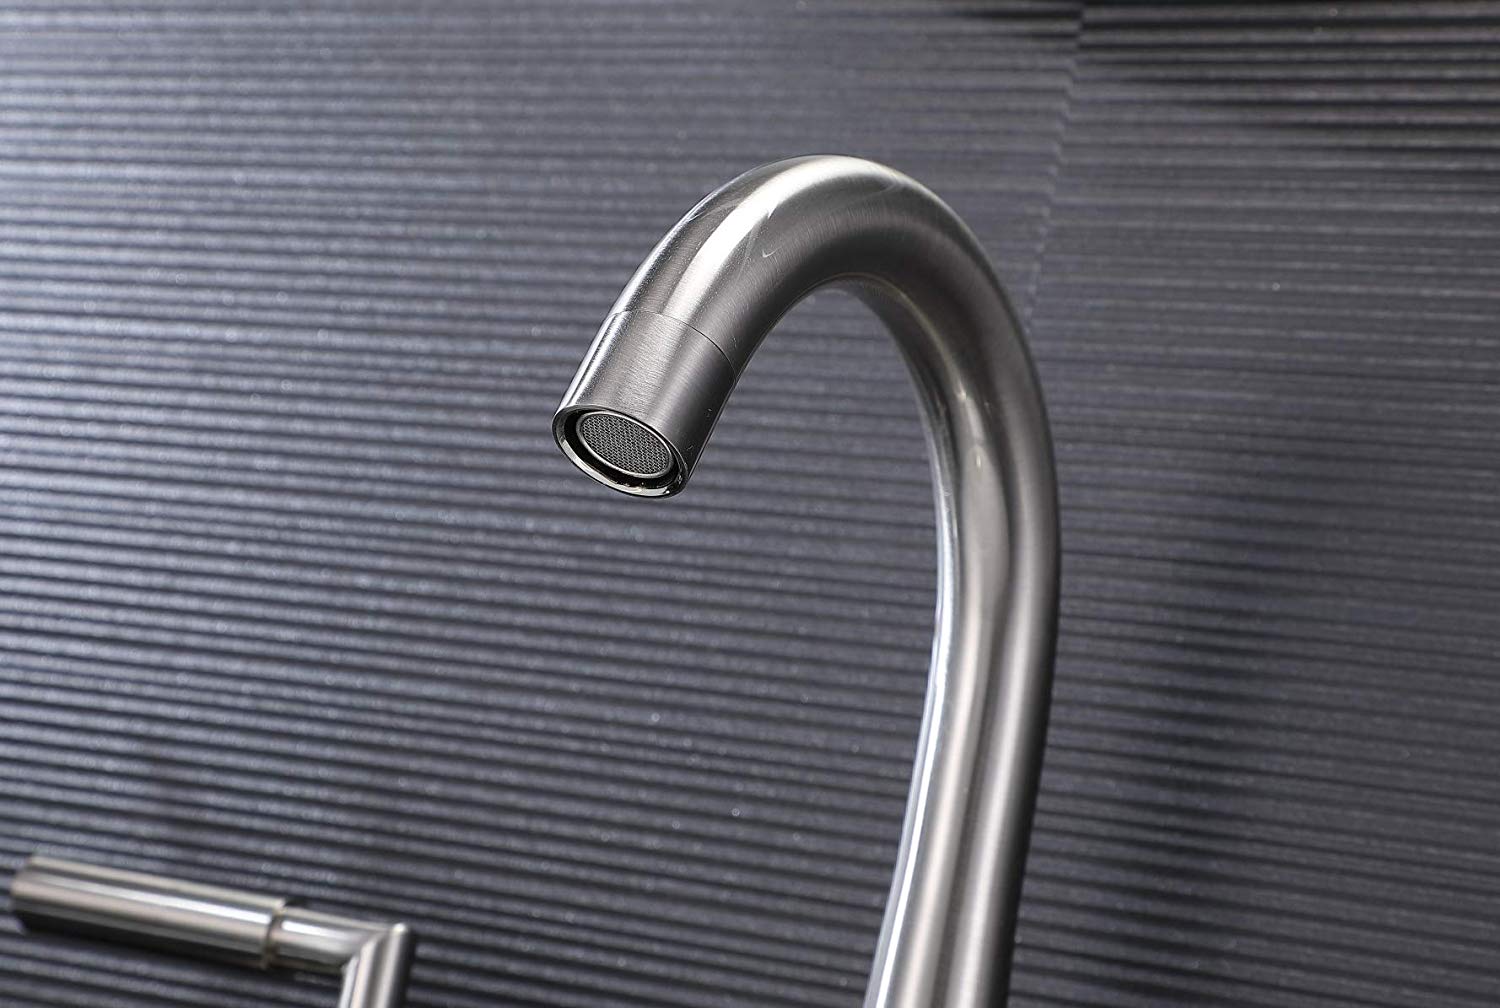 3-Hole 2-Handles Low-Arch Widespread Bathroom Faucet, Brushed Nickle Bathroom Sink Faucet by Vesla